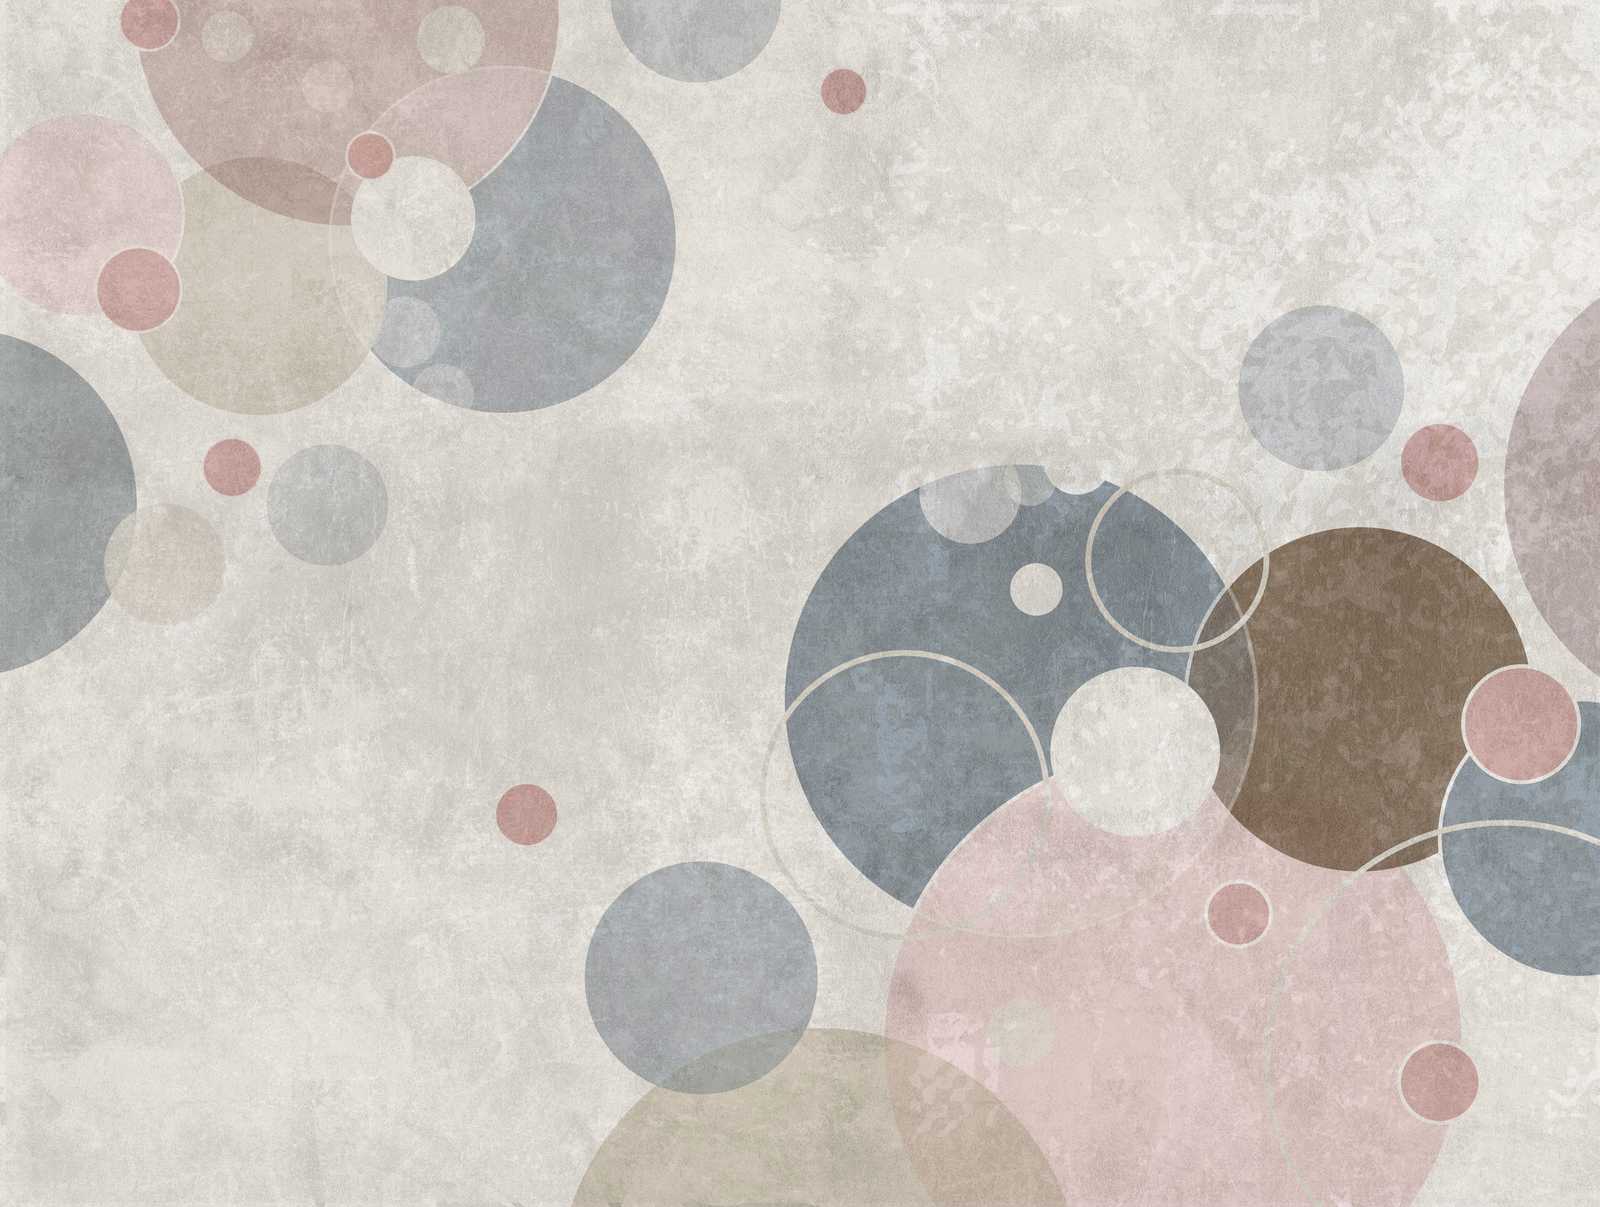             Wallpaper novelty - motif wallpaper circle pattern abstract in modern design
        